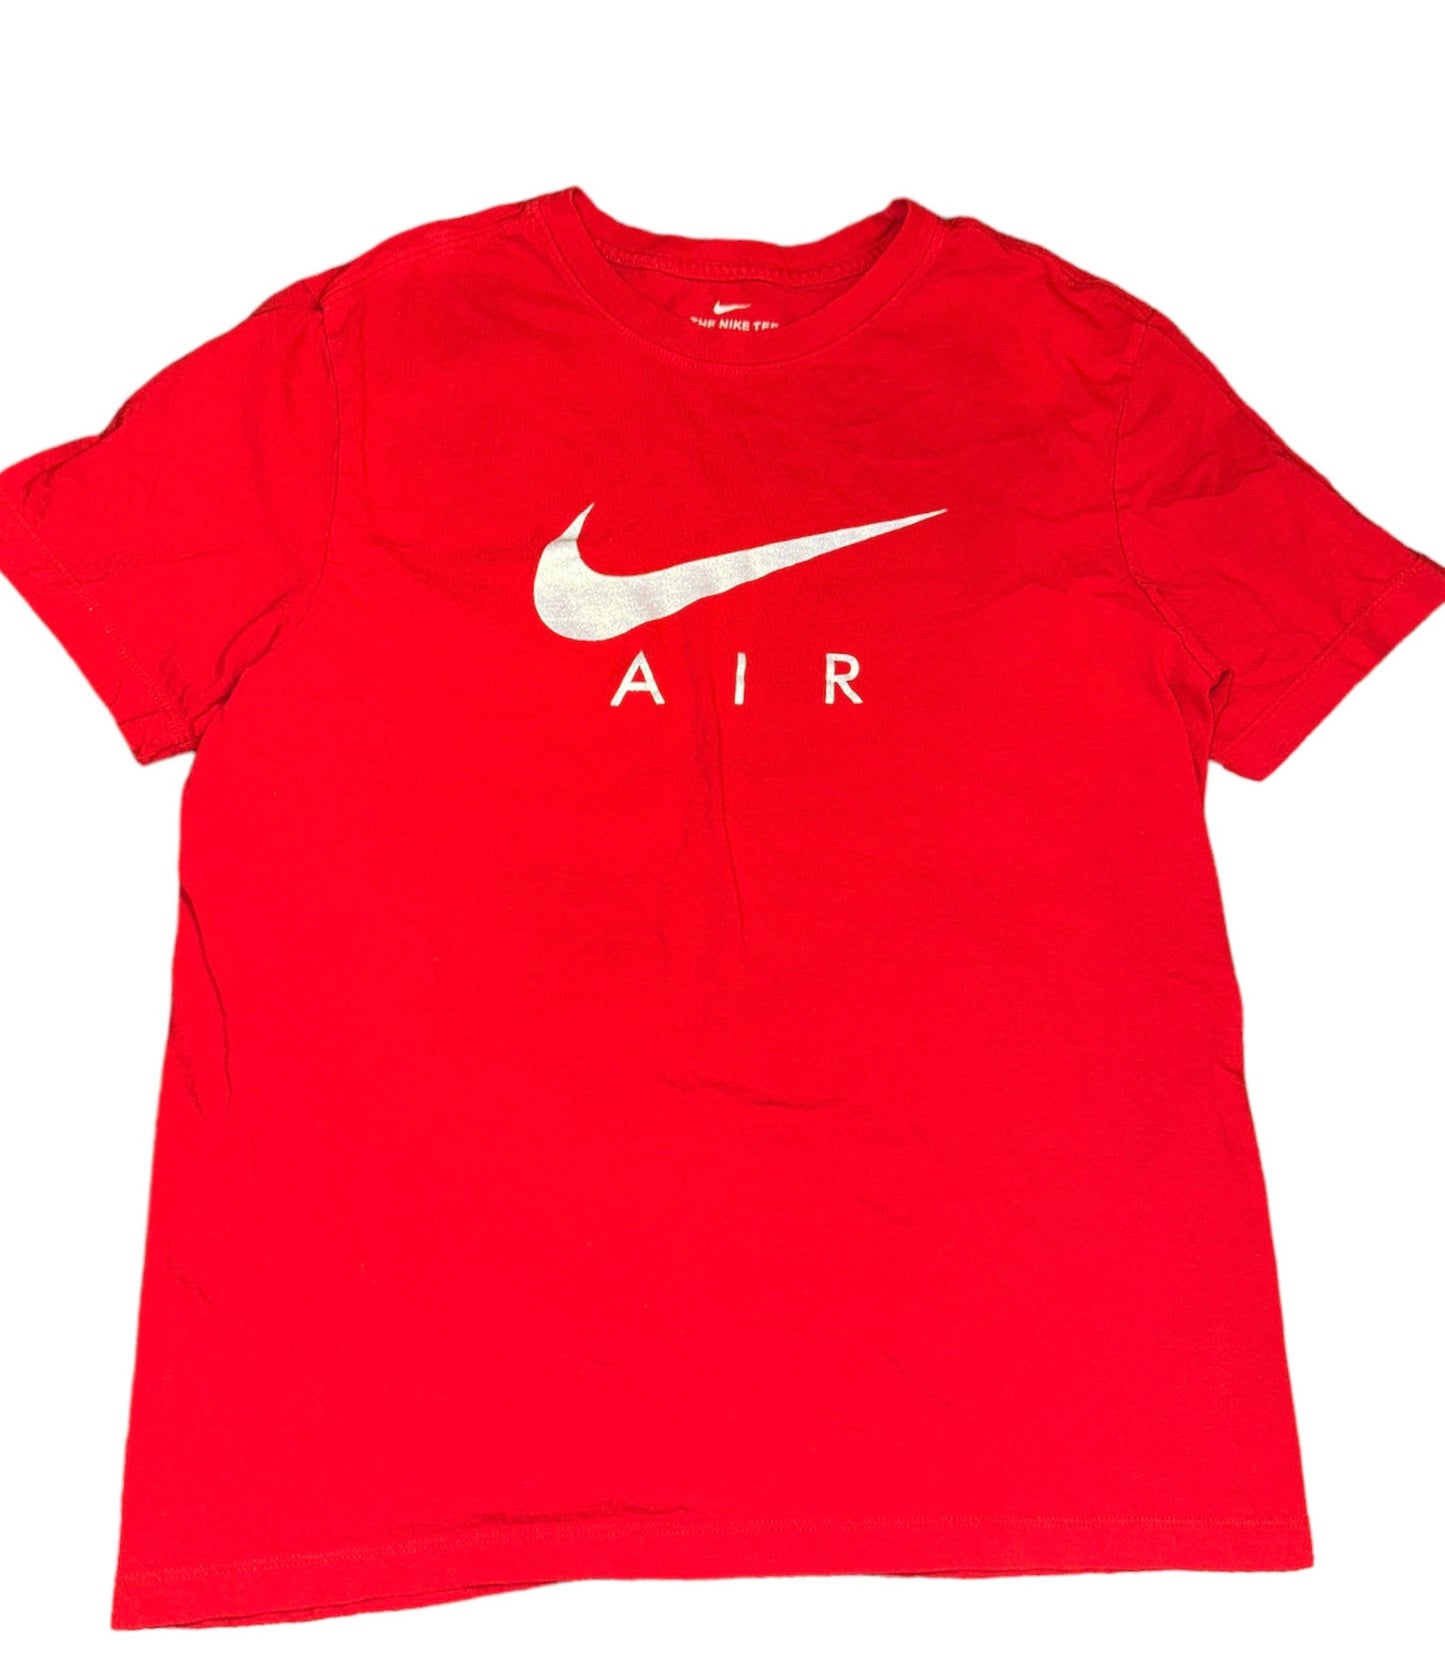 The Nike Tee - Red Light Gray T-shirt